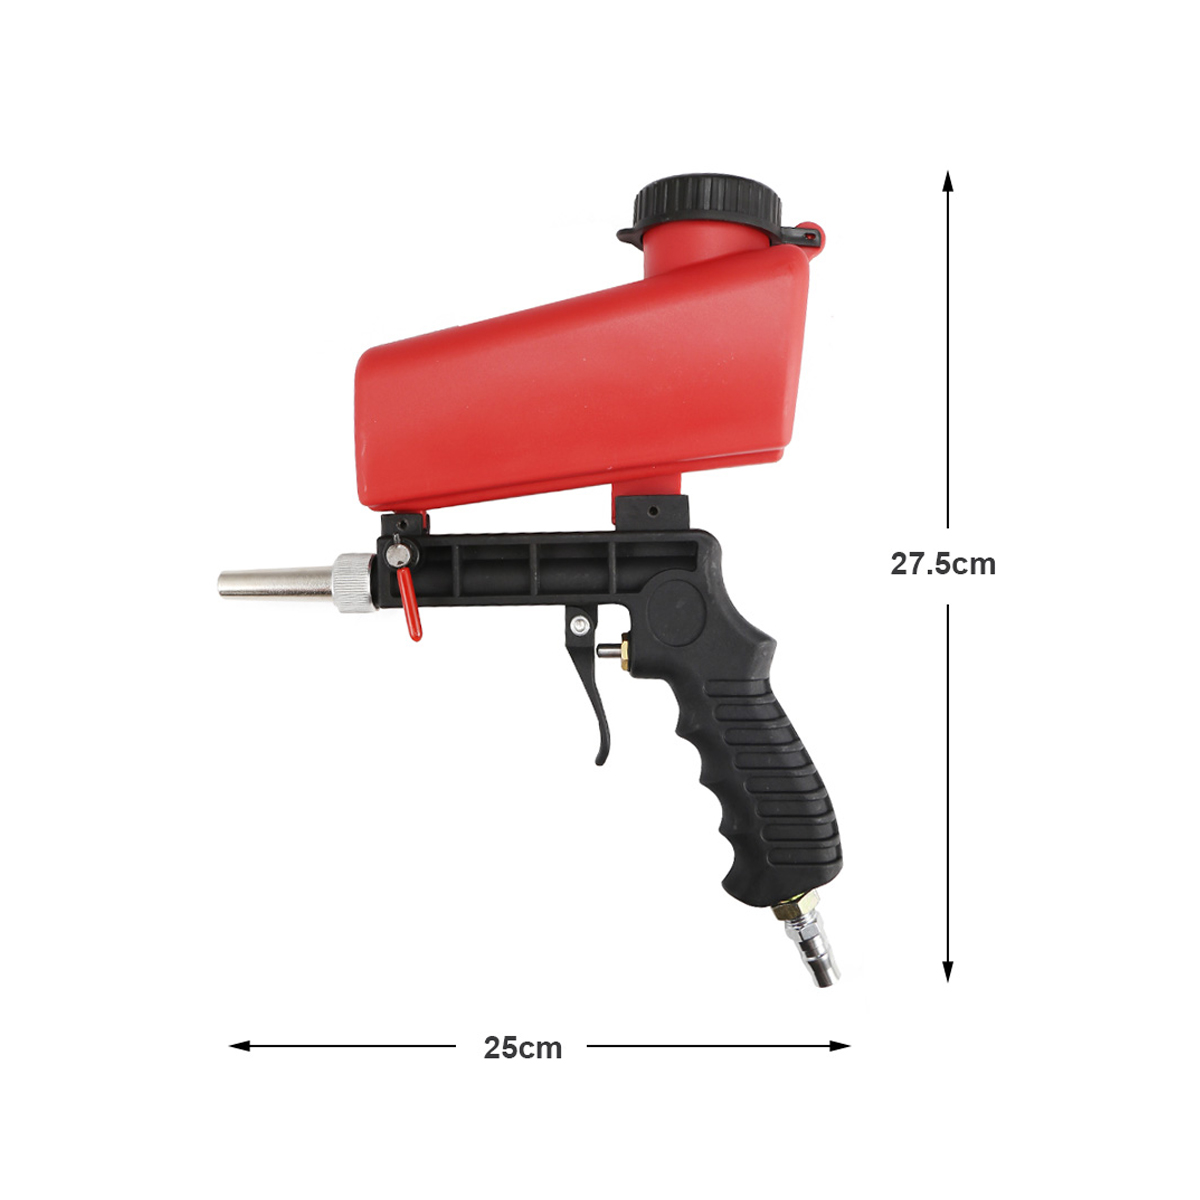 Portable-Gravity-Pneumatic-Sandblaster-Sprayer-Tool-Sandblasting-Machine-Removing-Spot-Rust-1607551-2